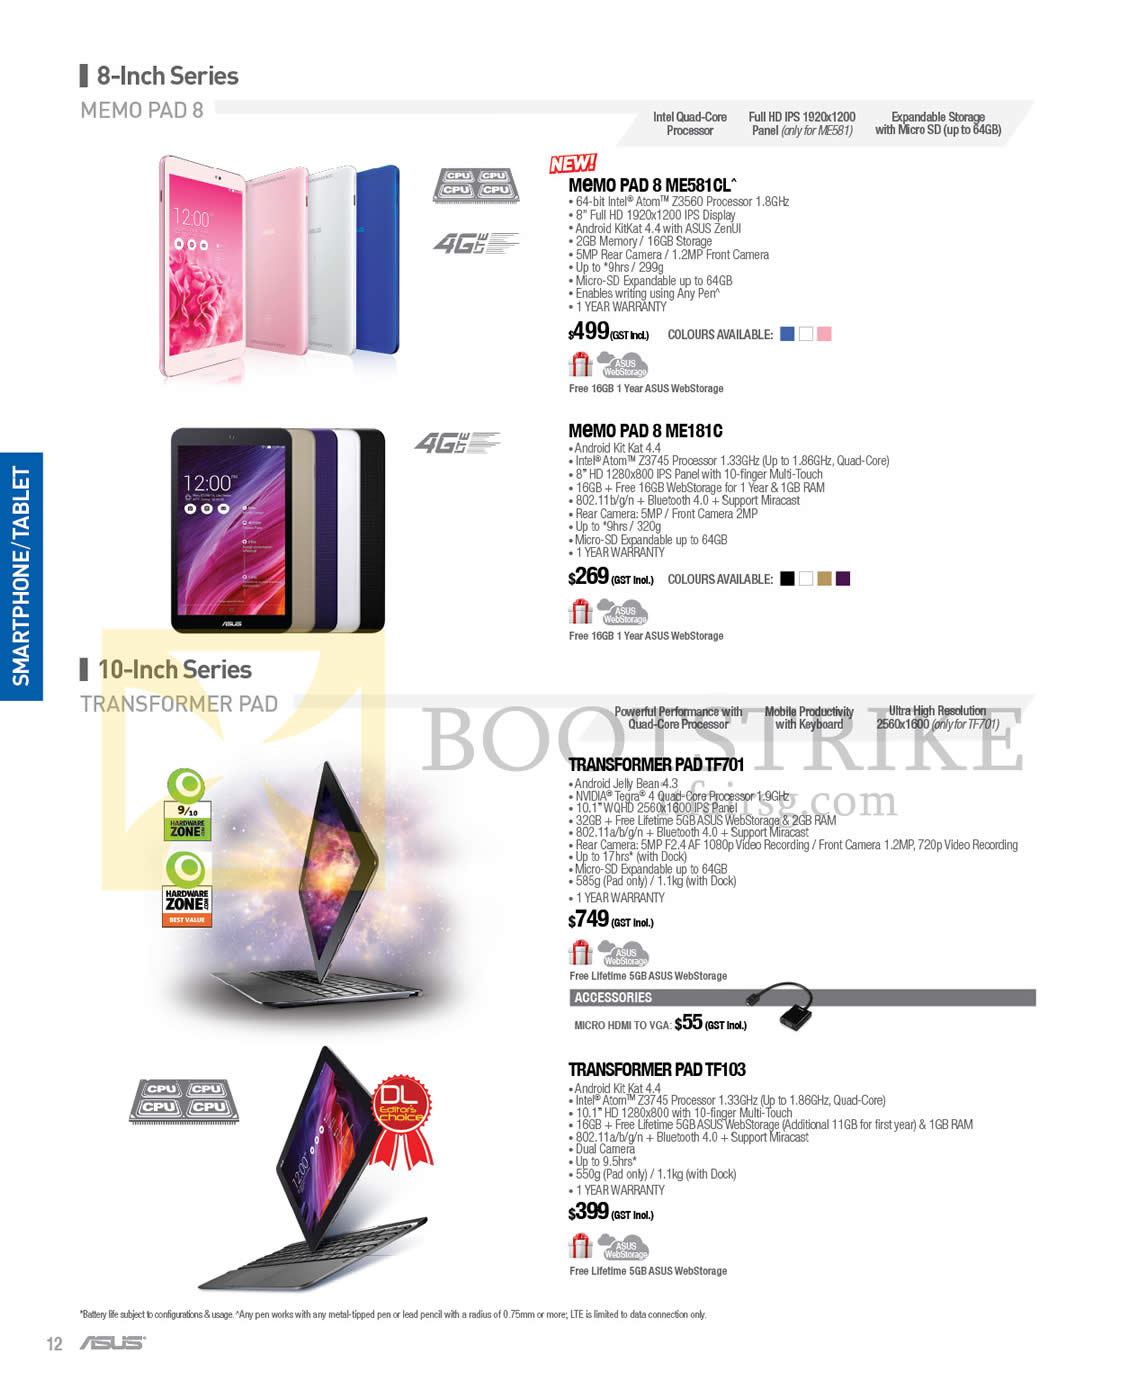 SITEX 2014 price list image brochure of ASUS Tablets MemoPad 8ME581CL, 8 ME181C, Transformer Pad TF701, TF103